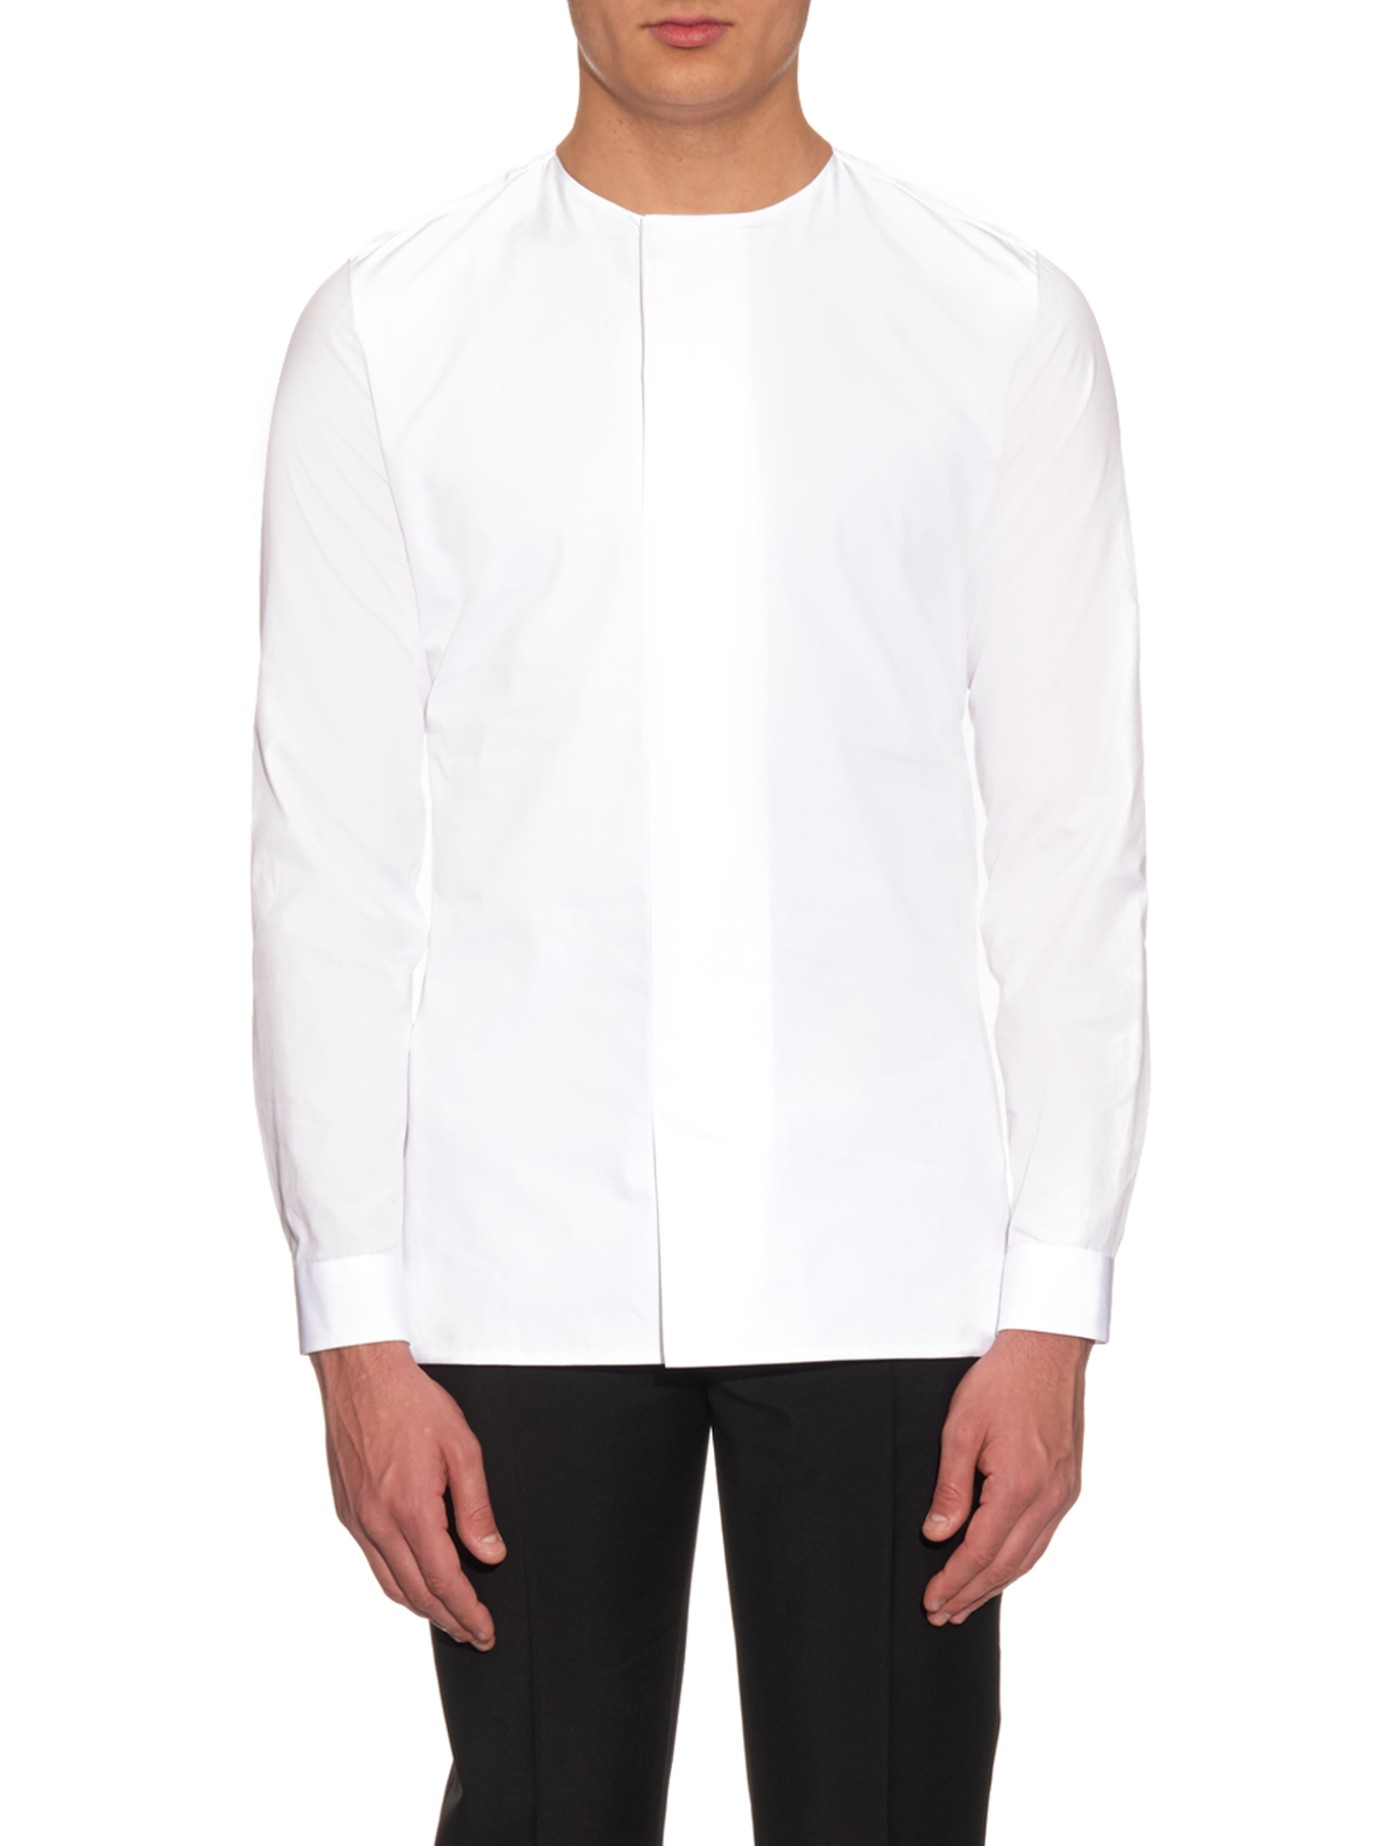 Lyst - Balenciaga Collarless Long-sleeved Shirt in White for Men